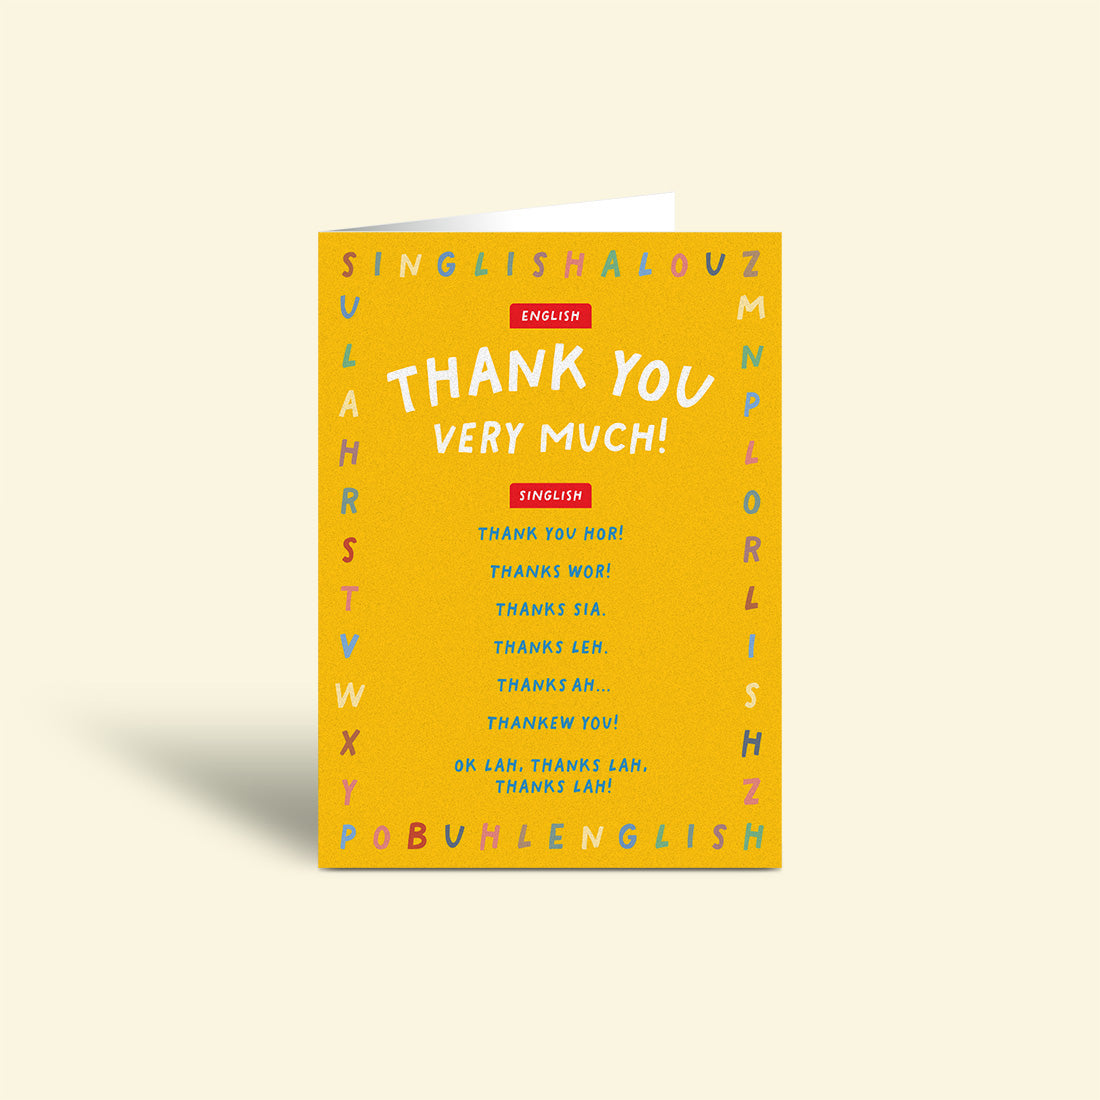 Thank you Card – English vs Singlish